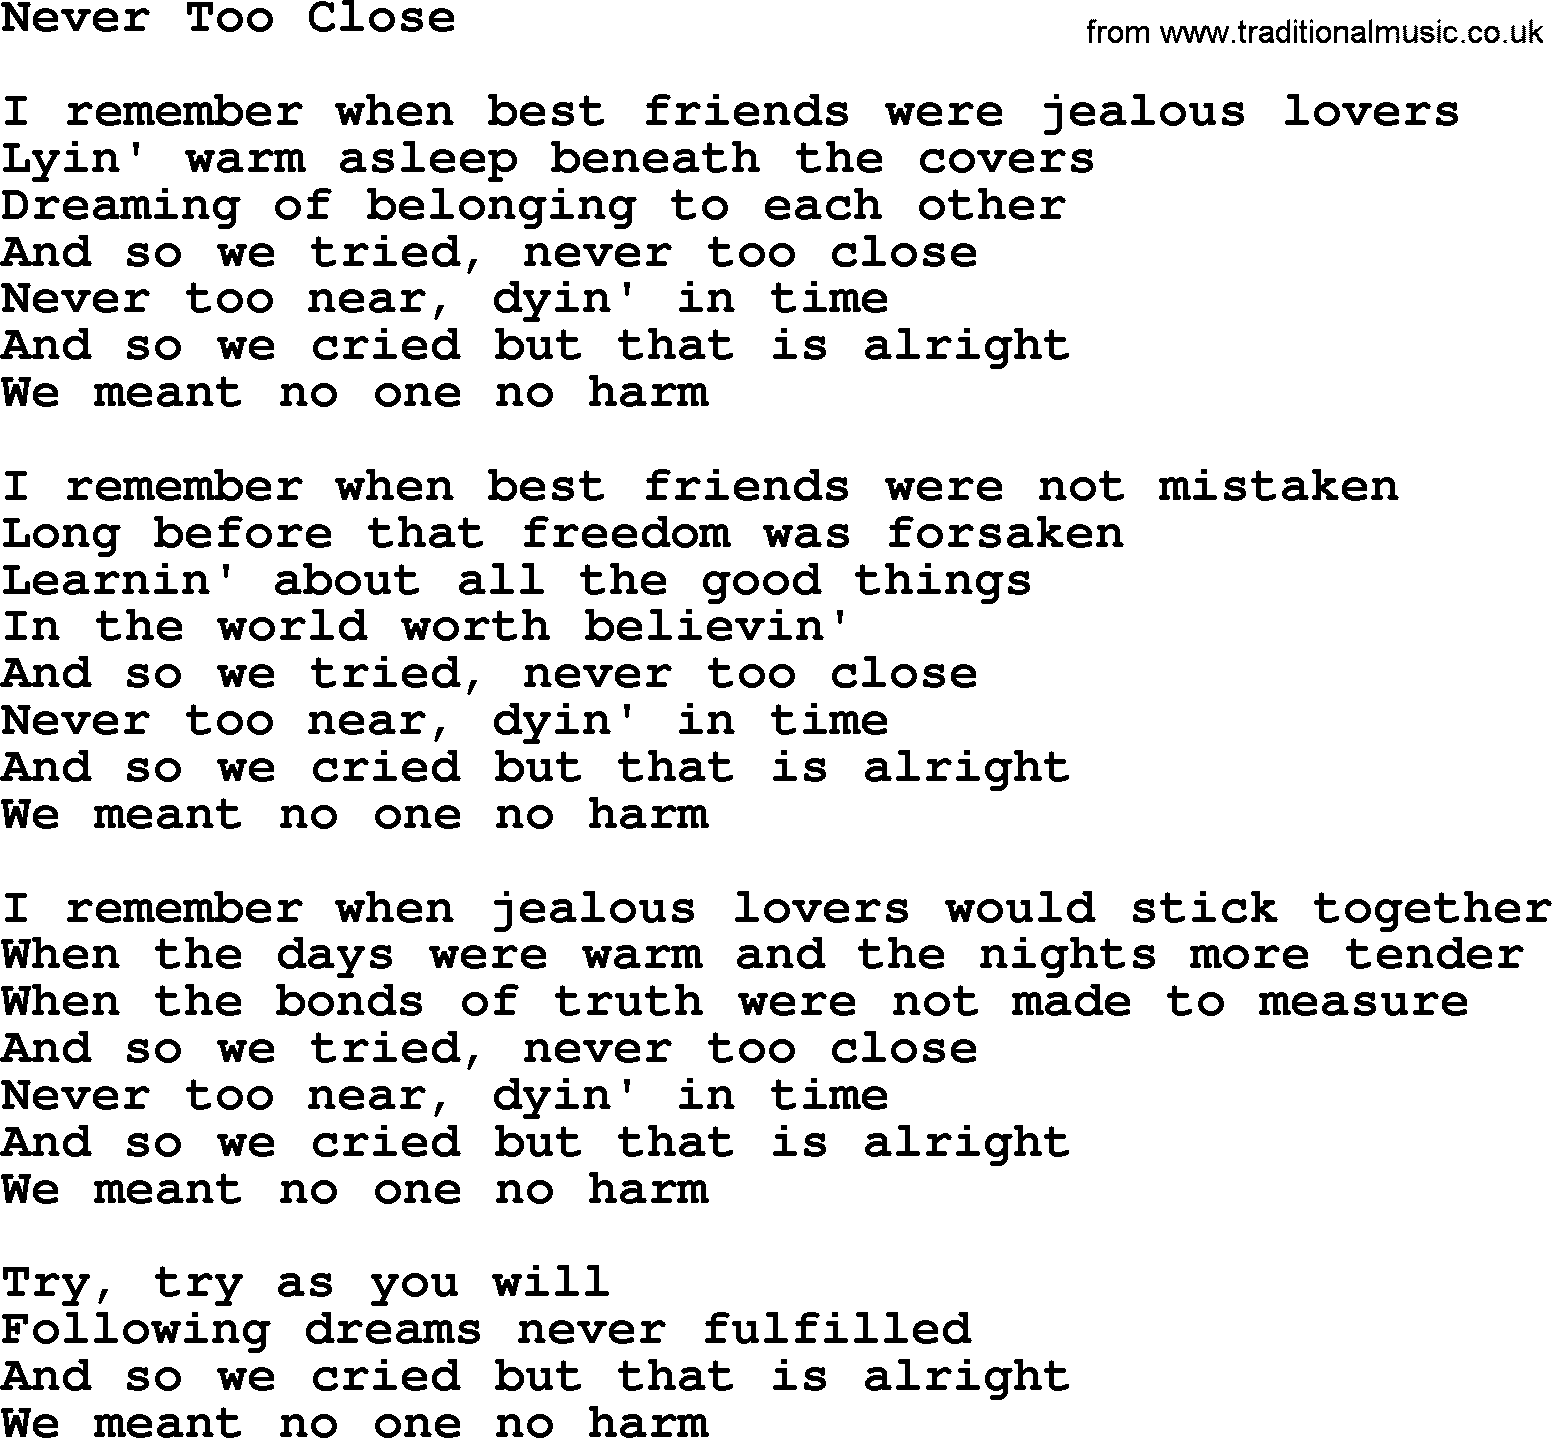 Gordon Lightfoot song Never Too Close, lyrics